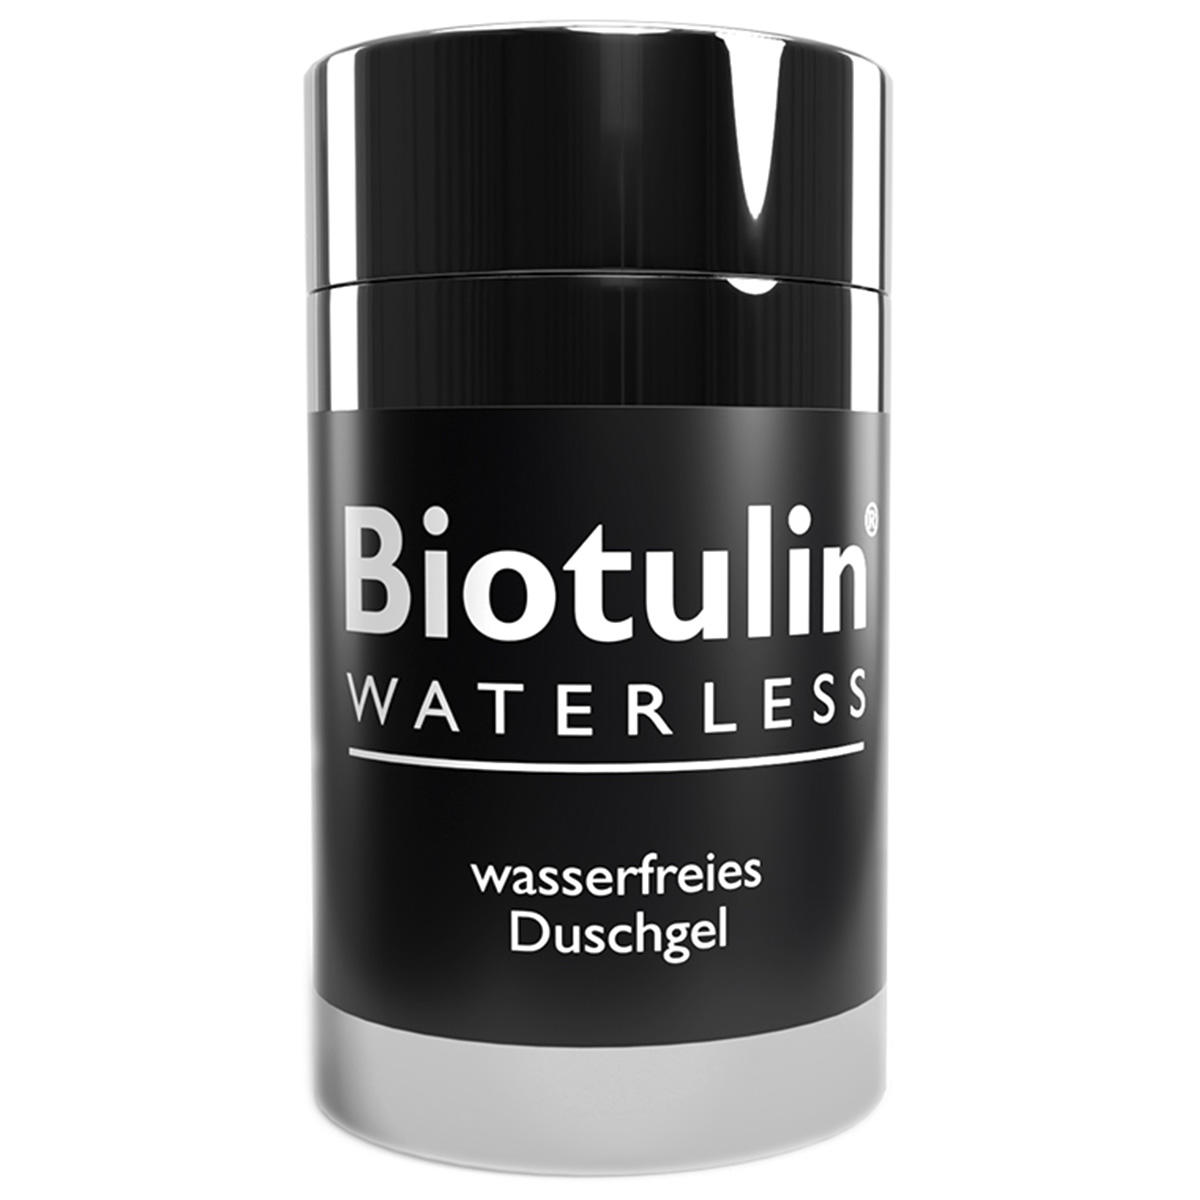 Biotulin WATERLESS watervrije douchegel 70 g - 1